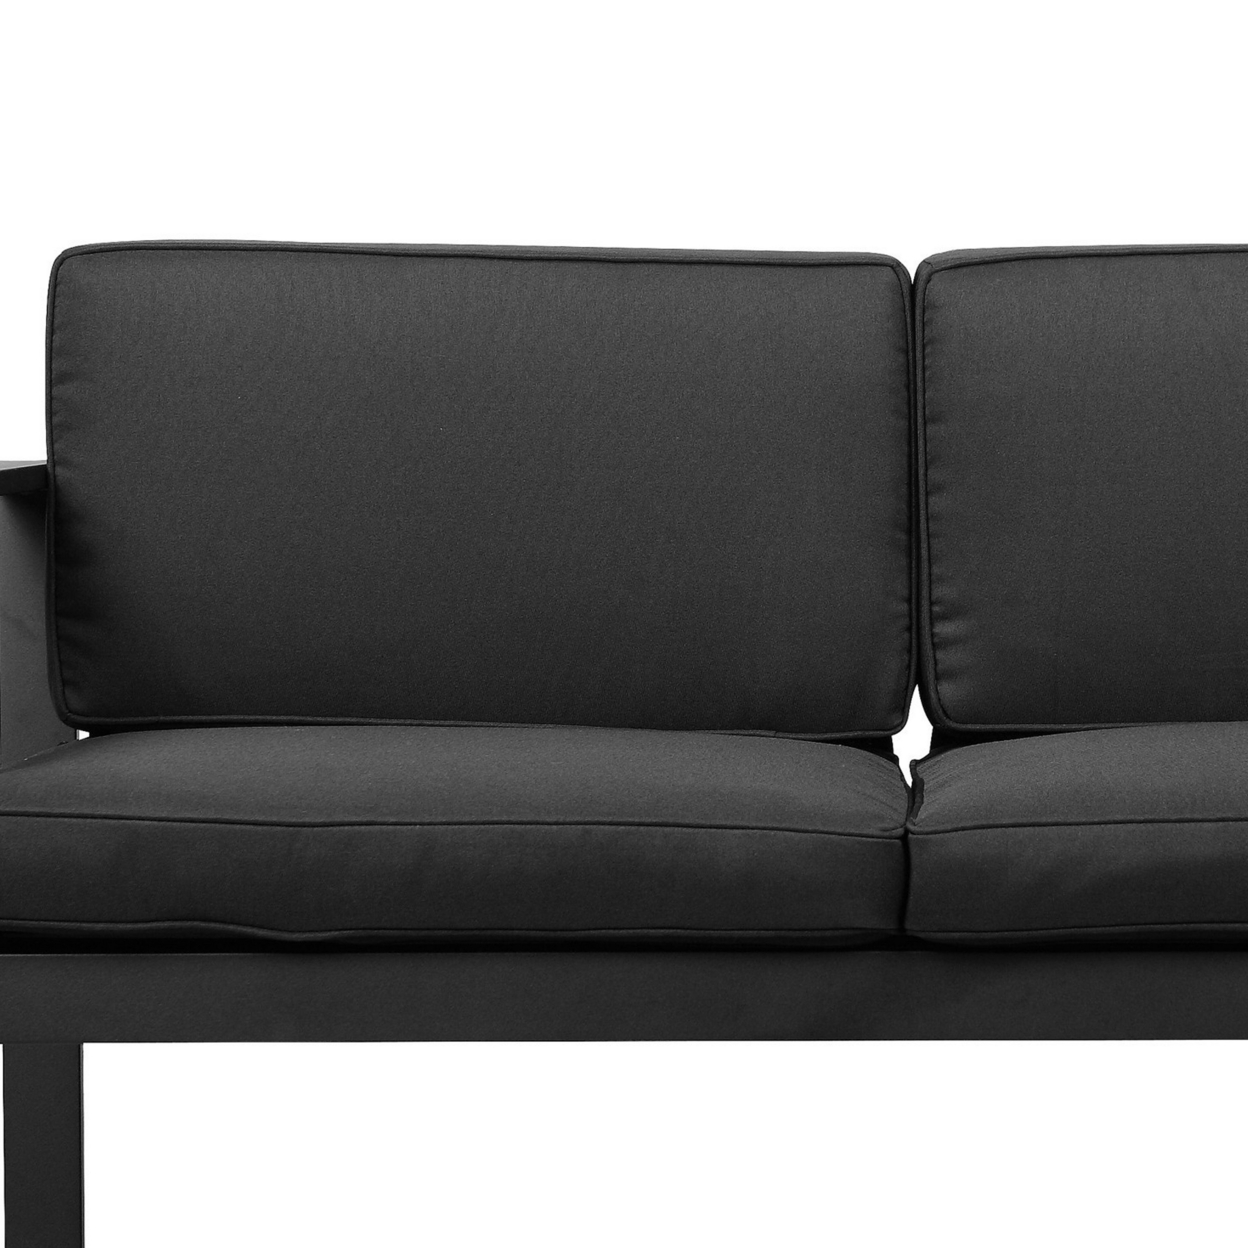 Kili 54 Inch Sofa, Jet Black Aluminum Frame, Water Resistant Cushions- Saltoro Sherpi